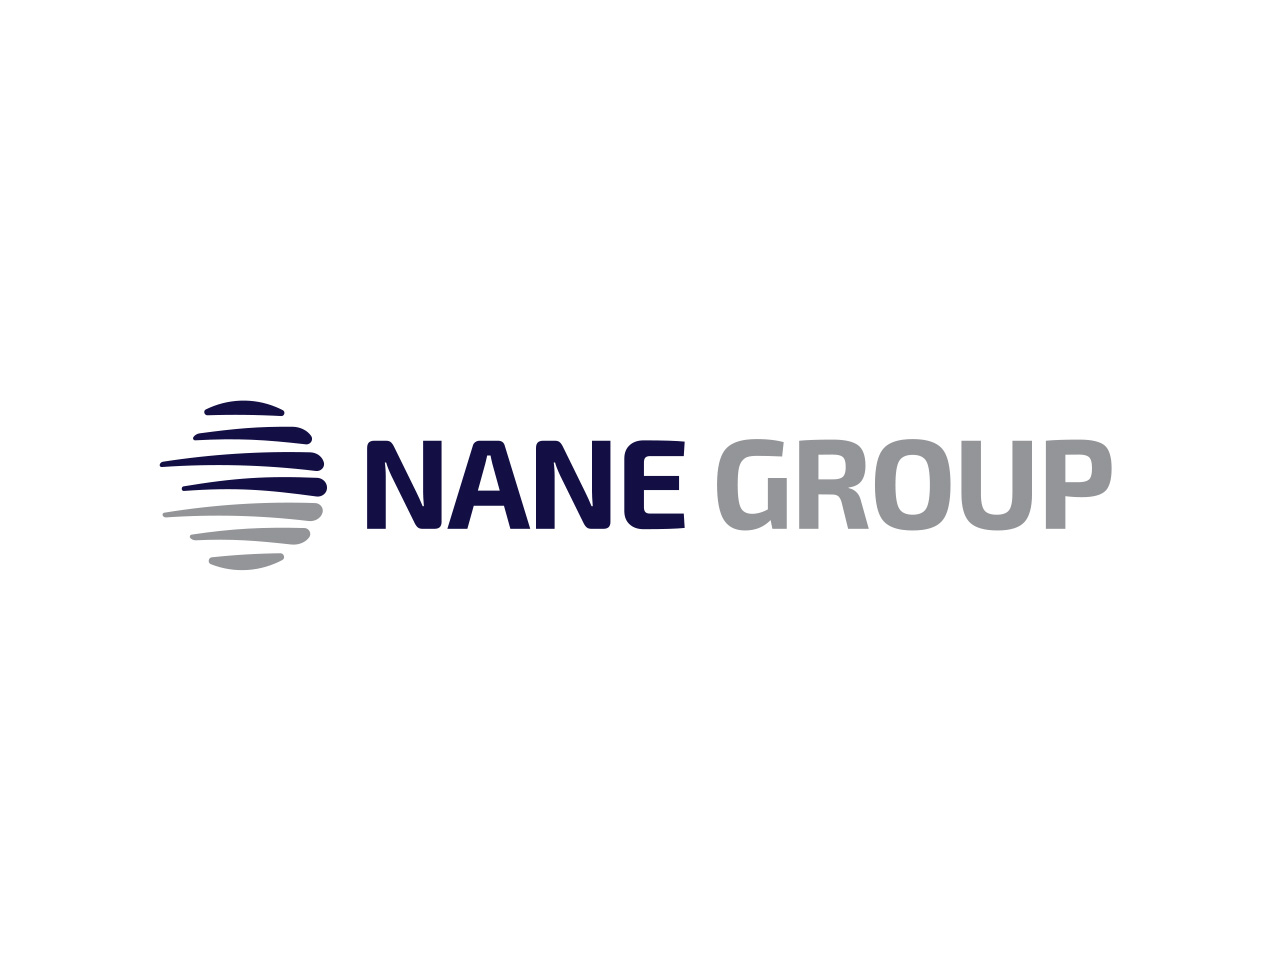 nane-group-logo-kurumsal-kimlik-tasarim-2